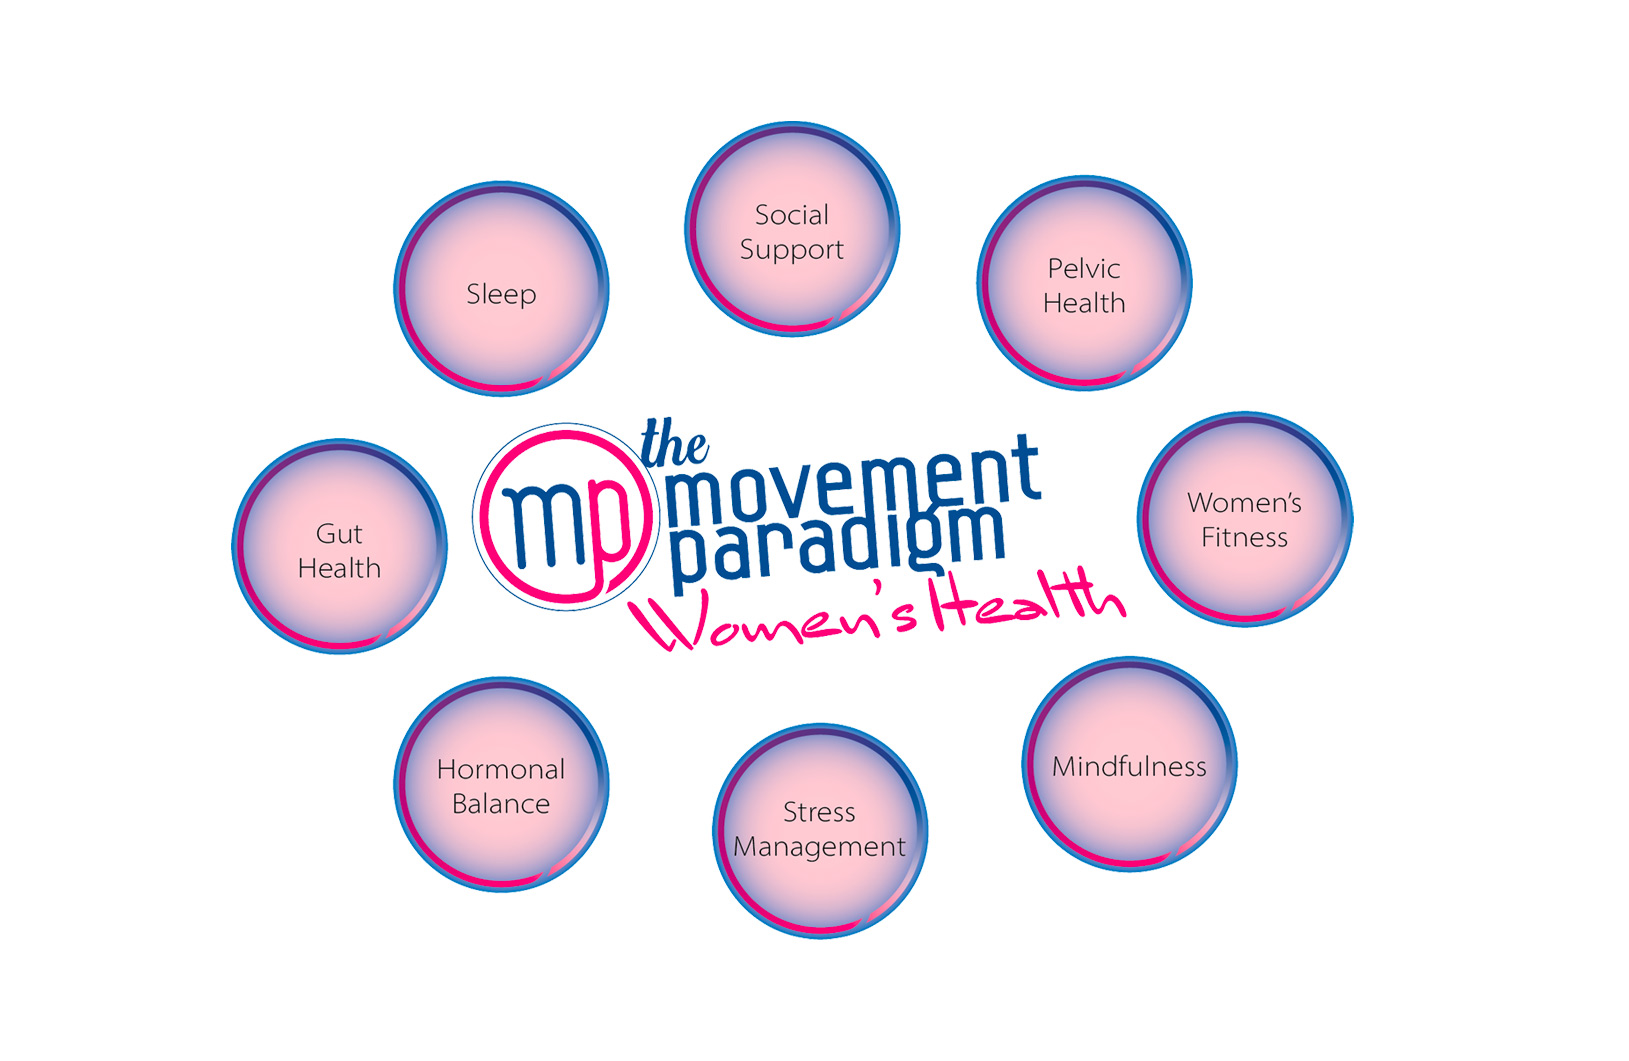 The Movement Paradigm Women's Health